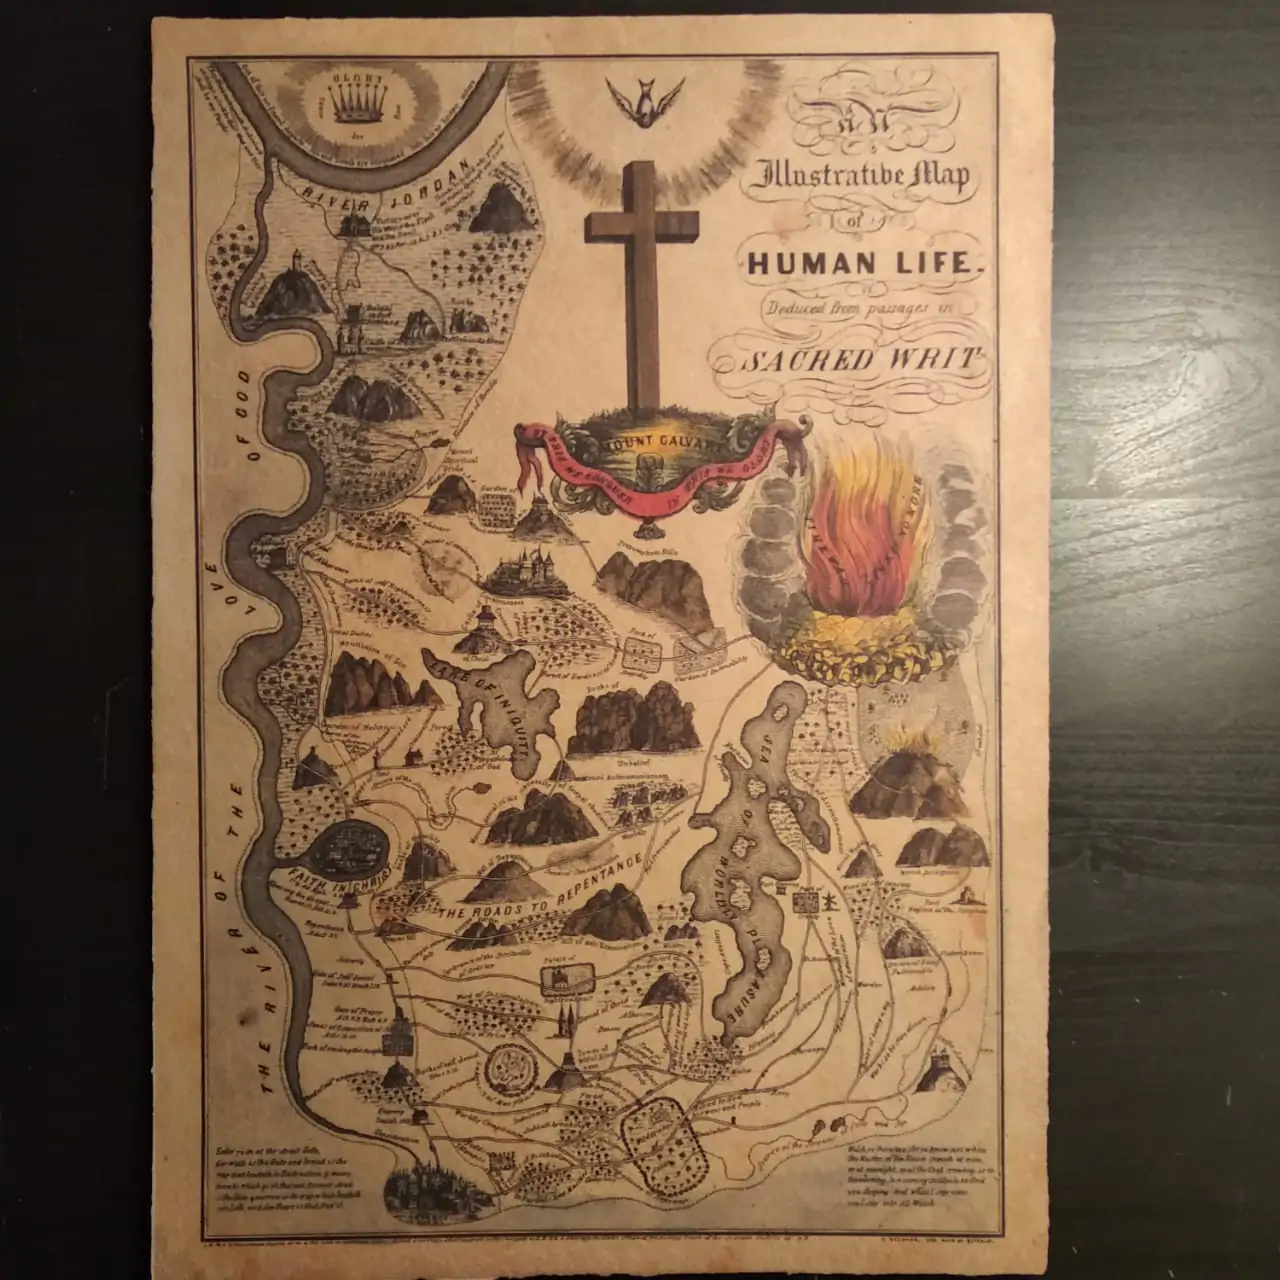 Illustrative Map of Human Life